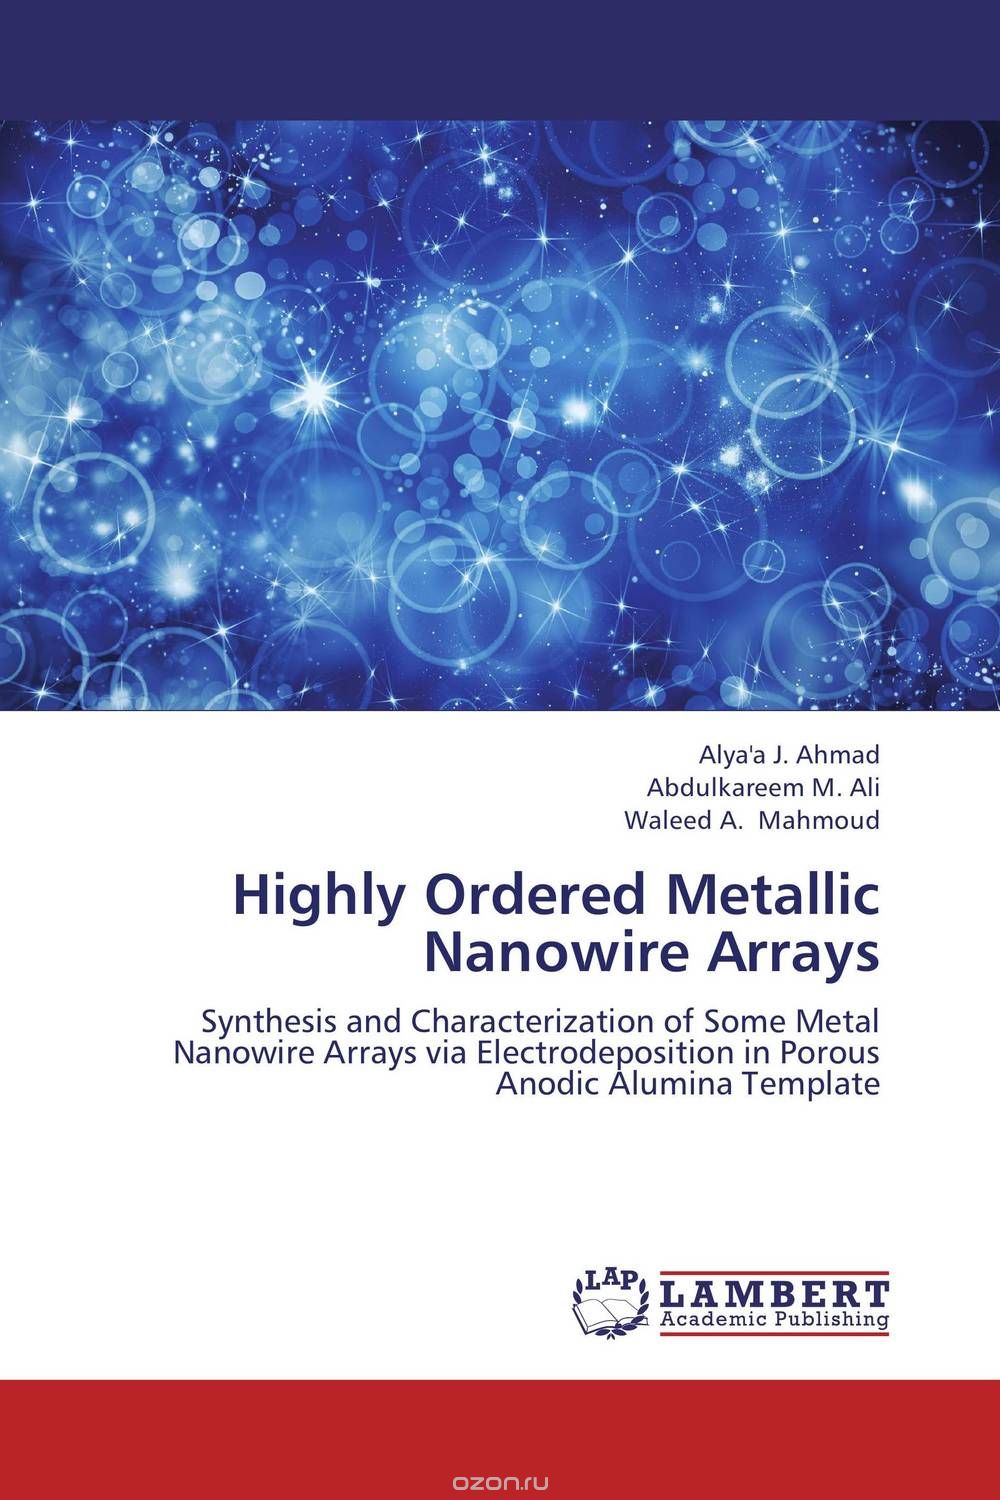 Скачать книгу "Highly Ordered Metallic Nanowire Arrays"